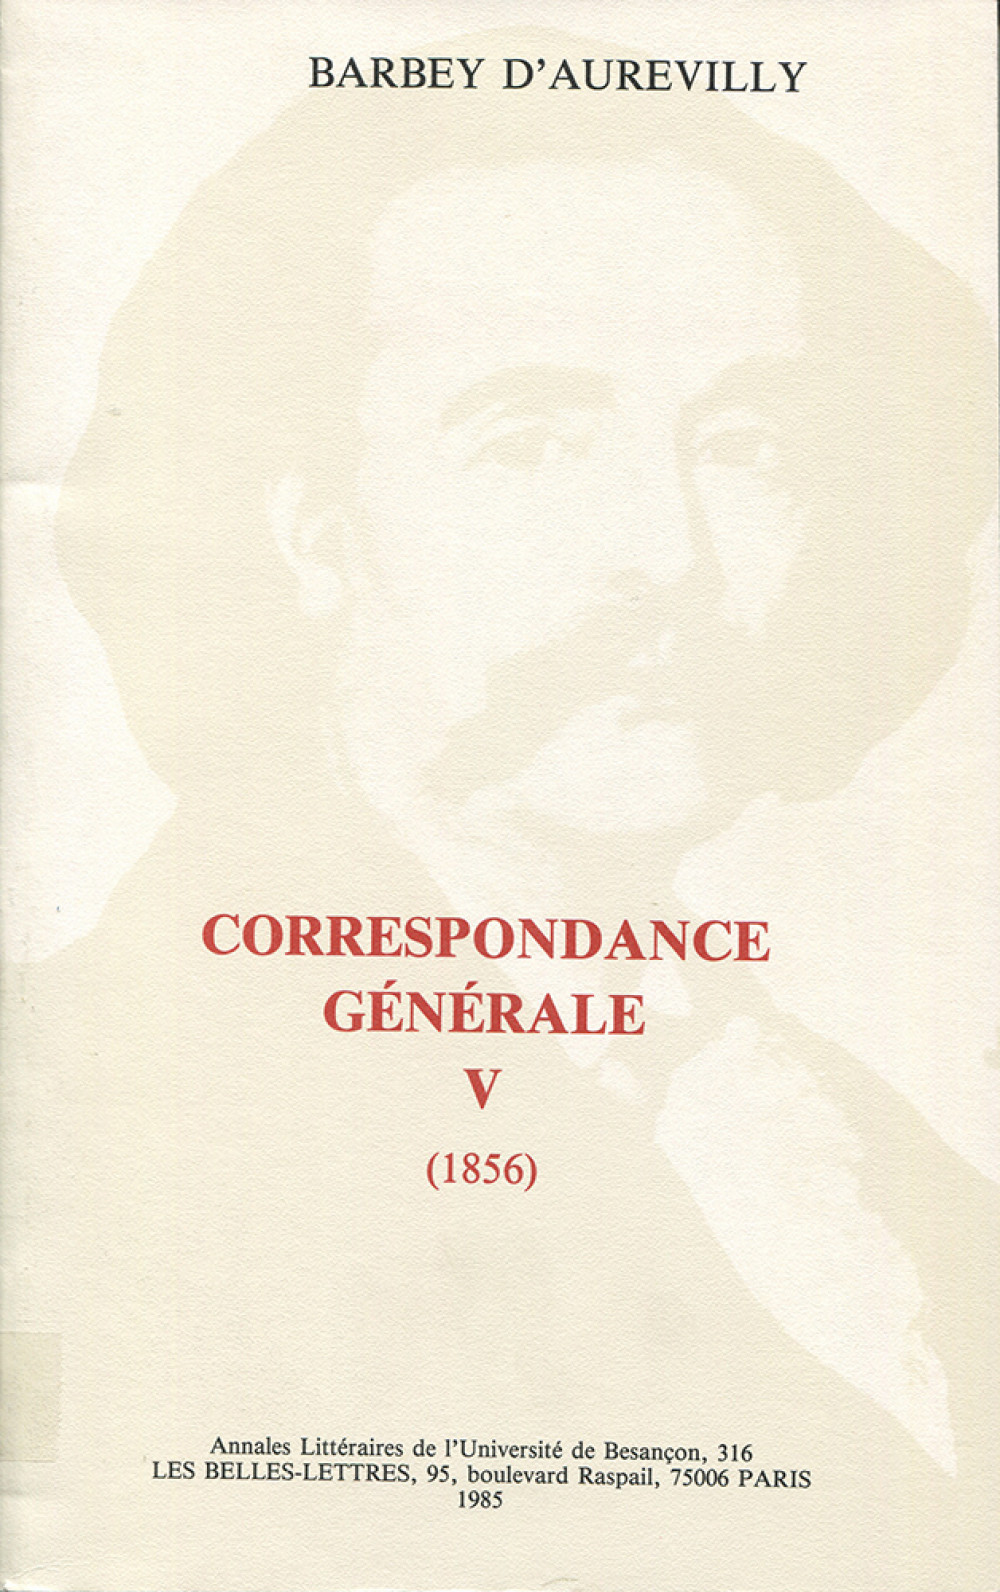 Barbey d'Aurevilly. Correspondance générale V (1856)